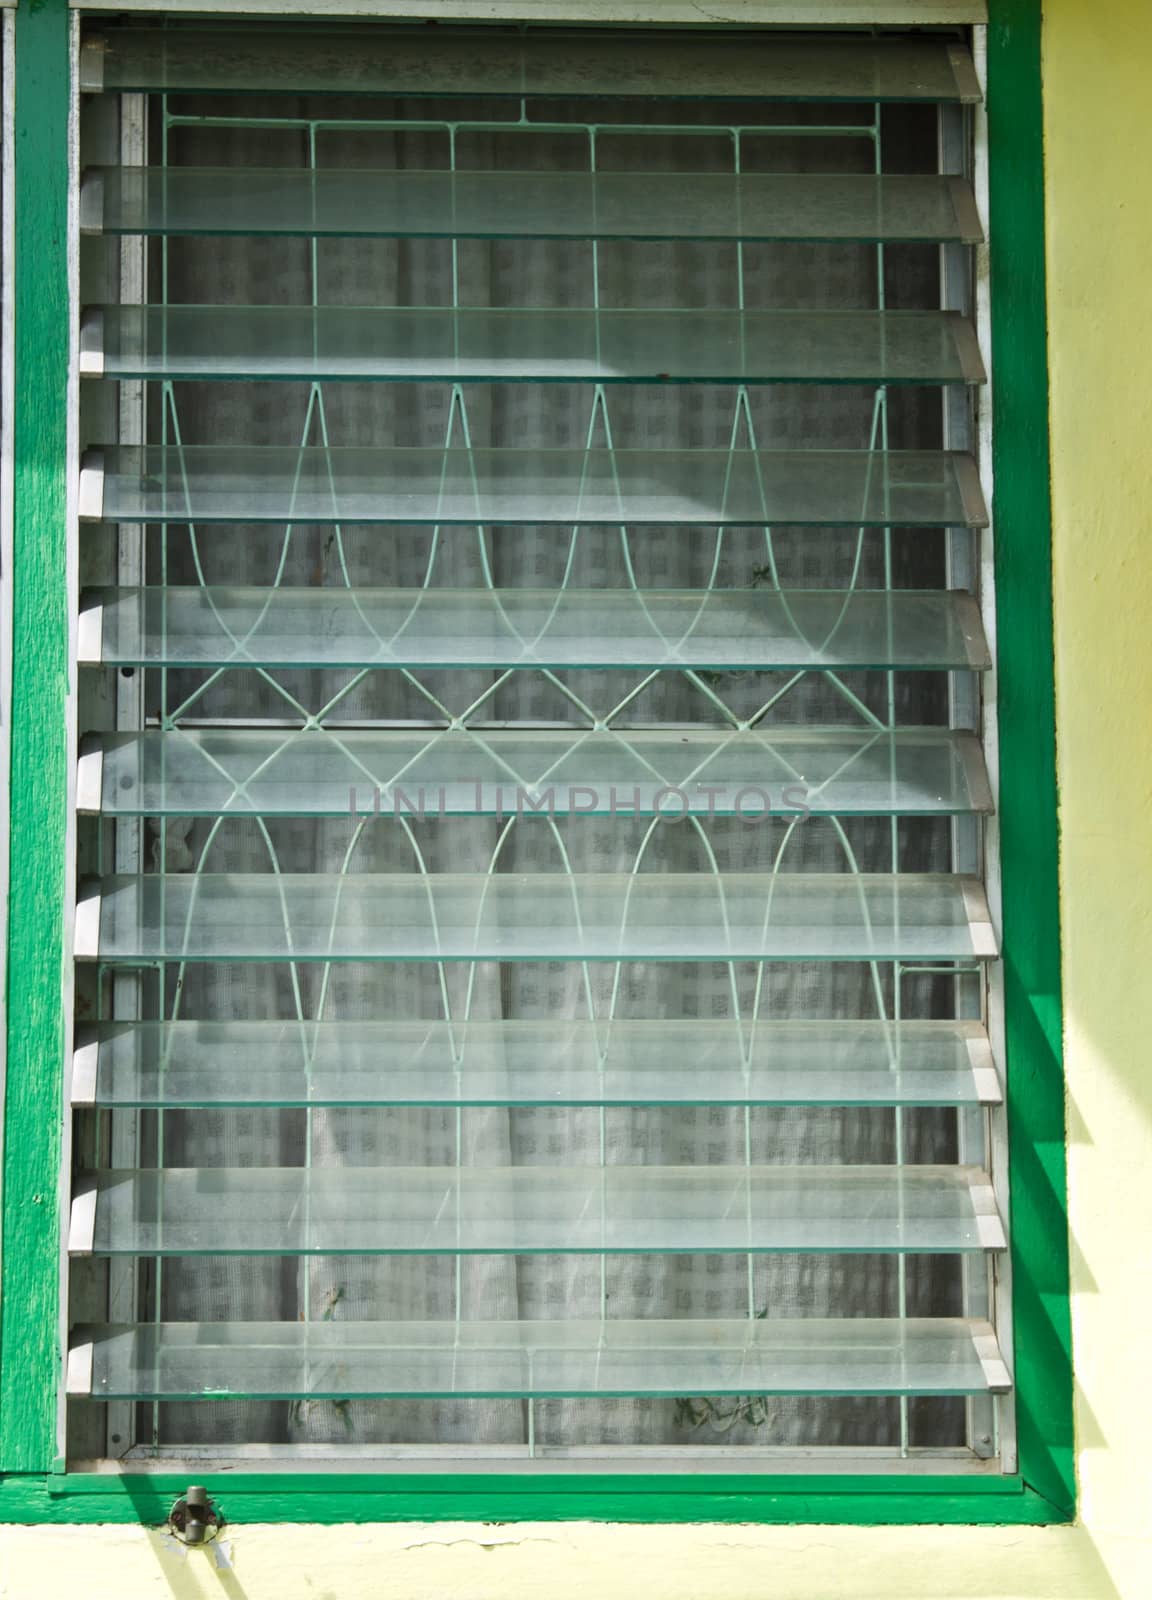 An opened glass lourve window